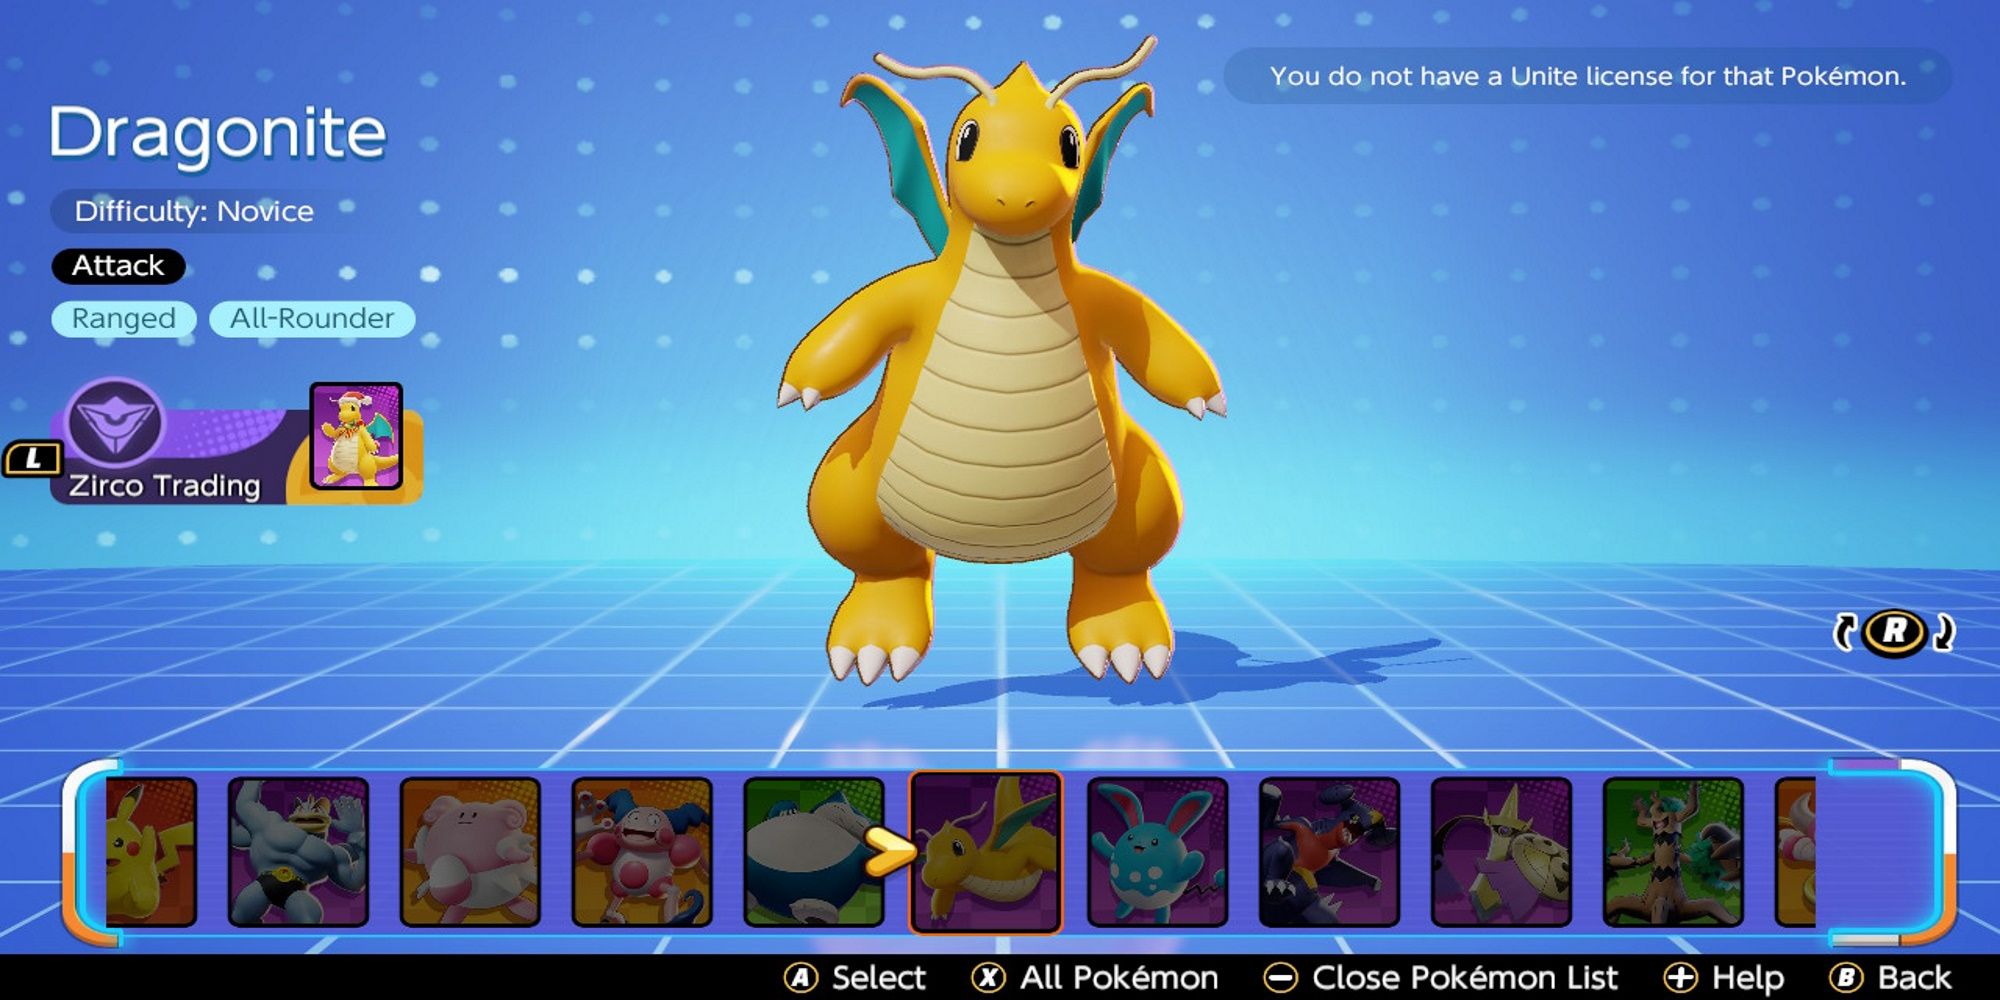 Dragonite's Pokemon selection screen, labeling it a novice-level Pokemon